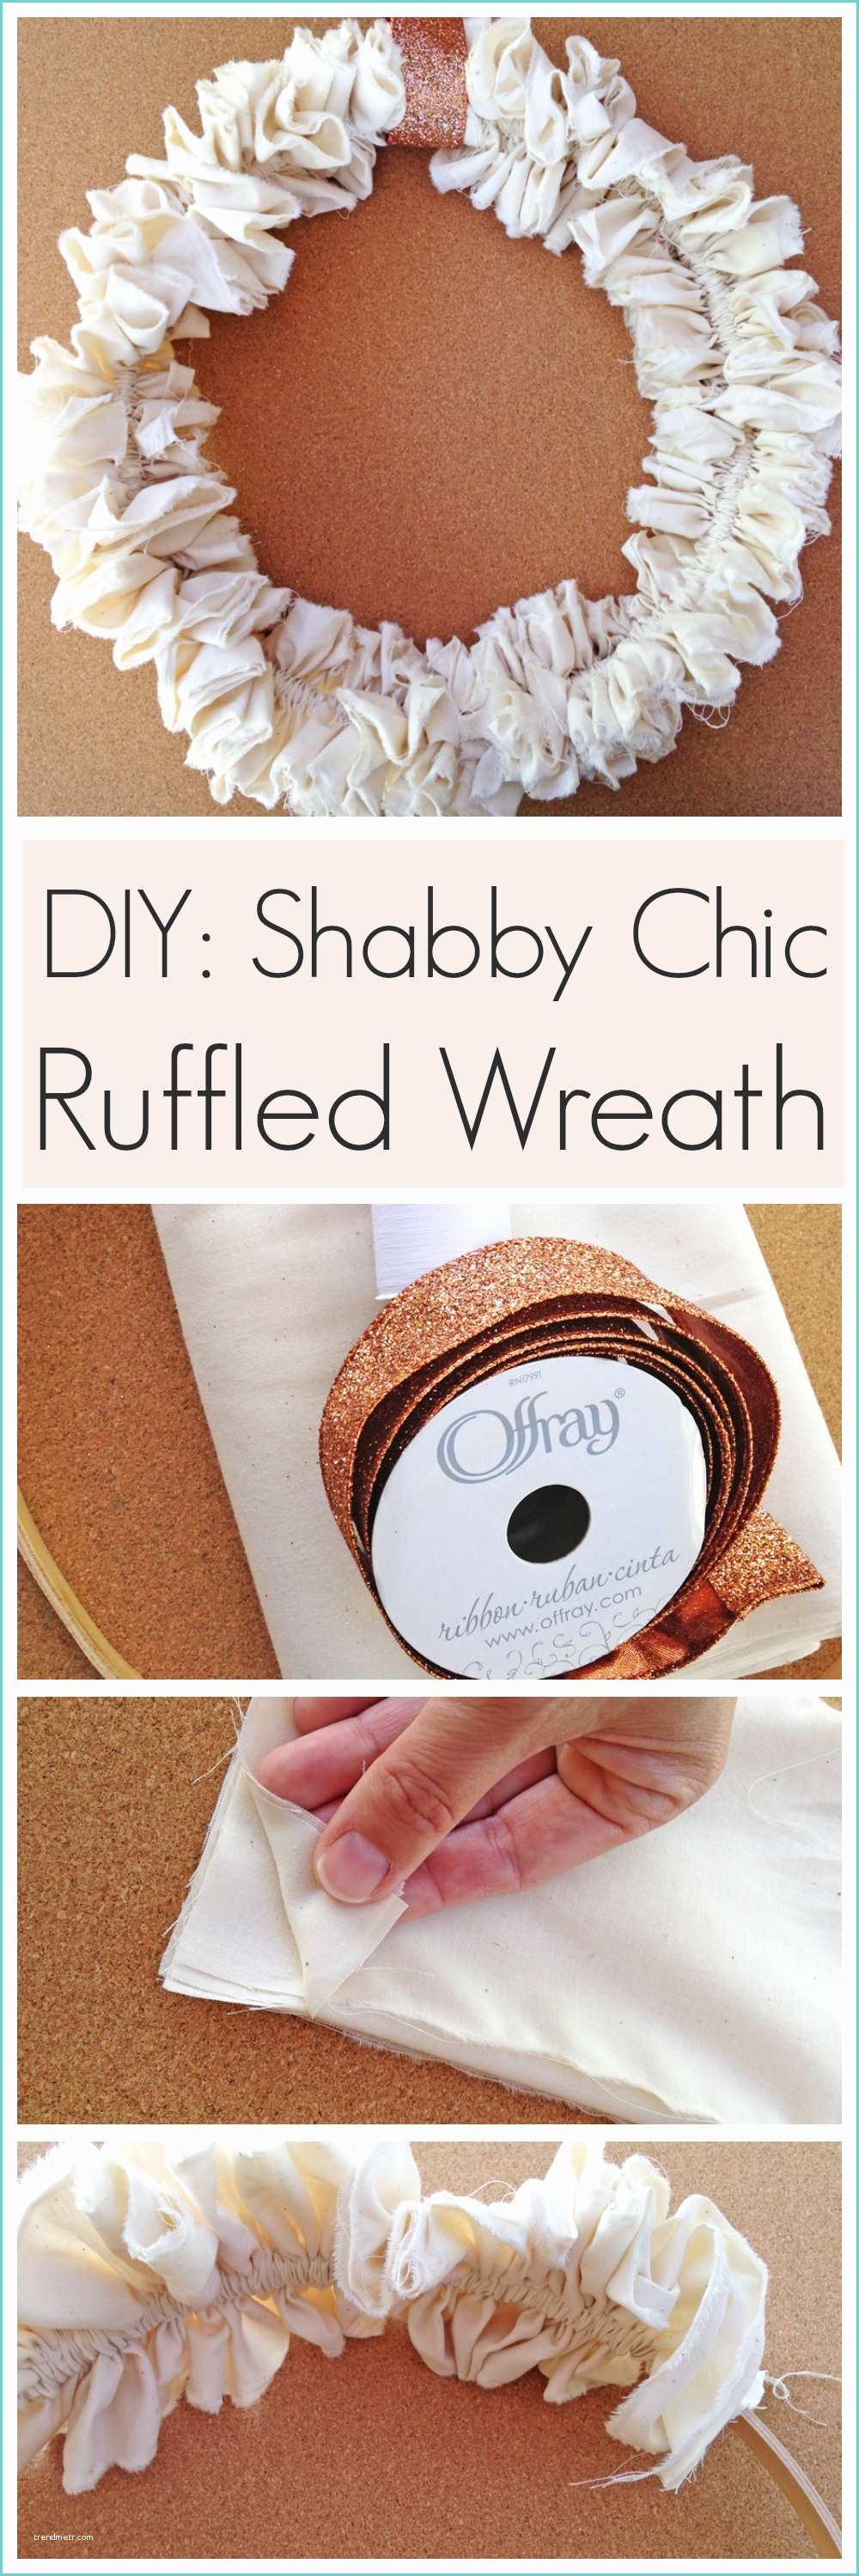 Blog Shabby Chic Shabby Chic Ruffled Wreath Diy